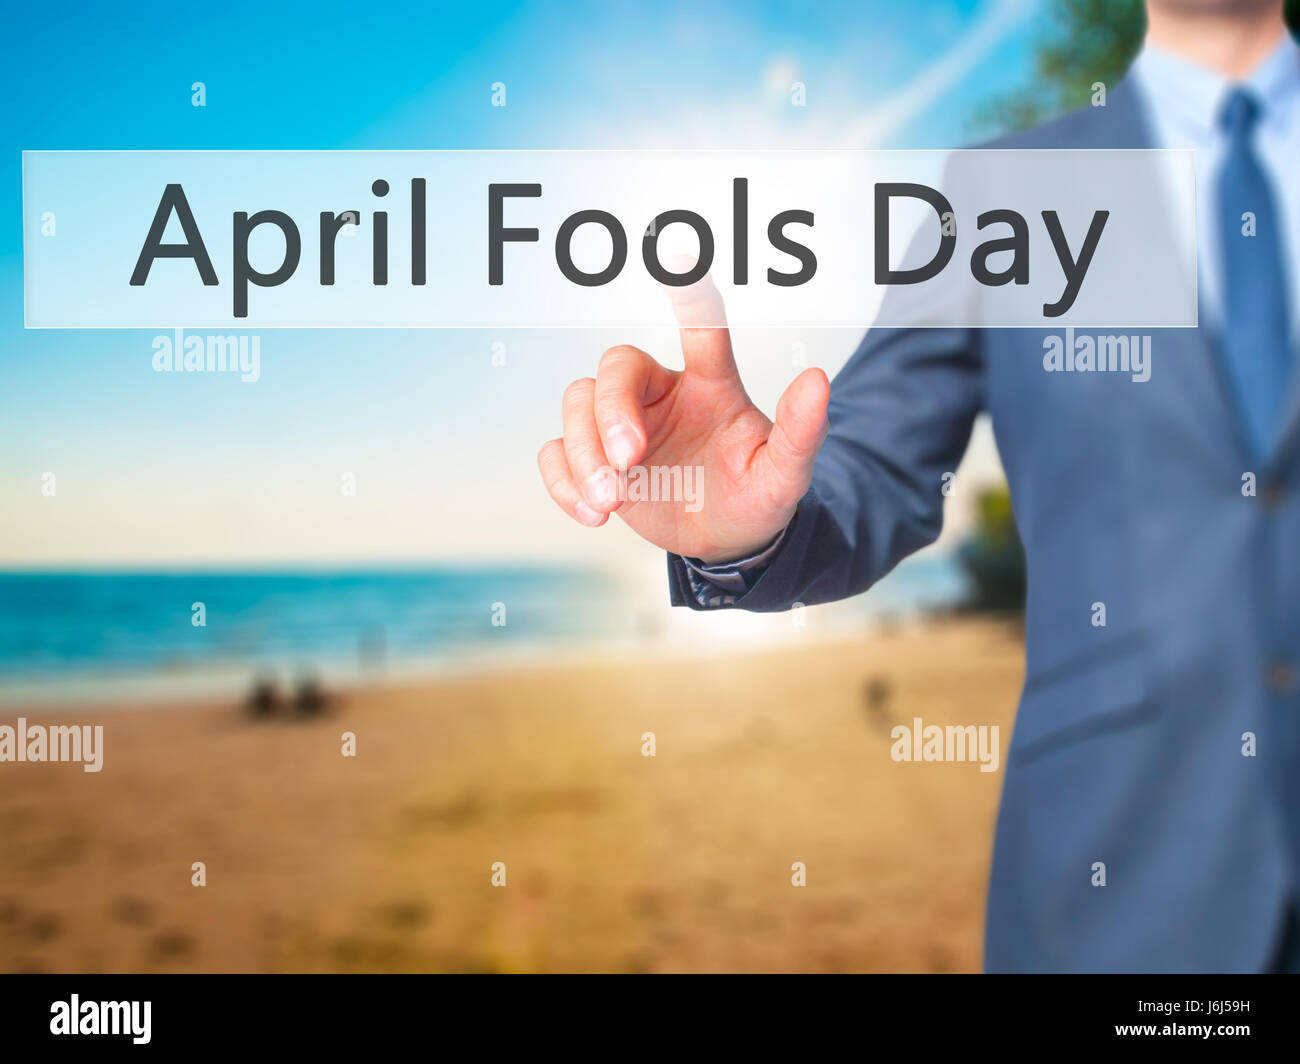 April Fools Day - Empresario pulse en pantalla digital. Concepto de empresa, internet. Stock Photo Foto de stock